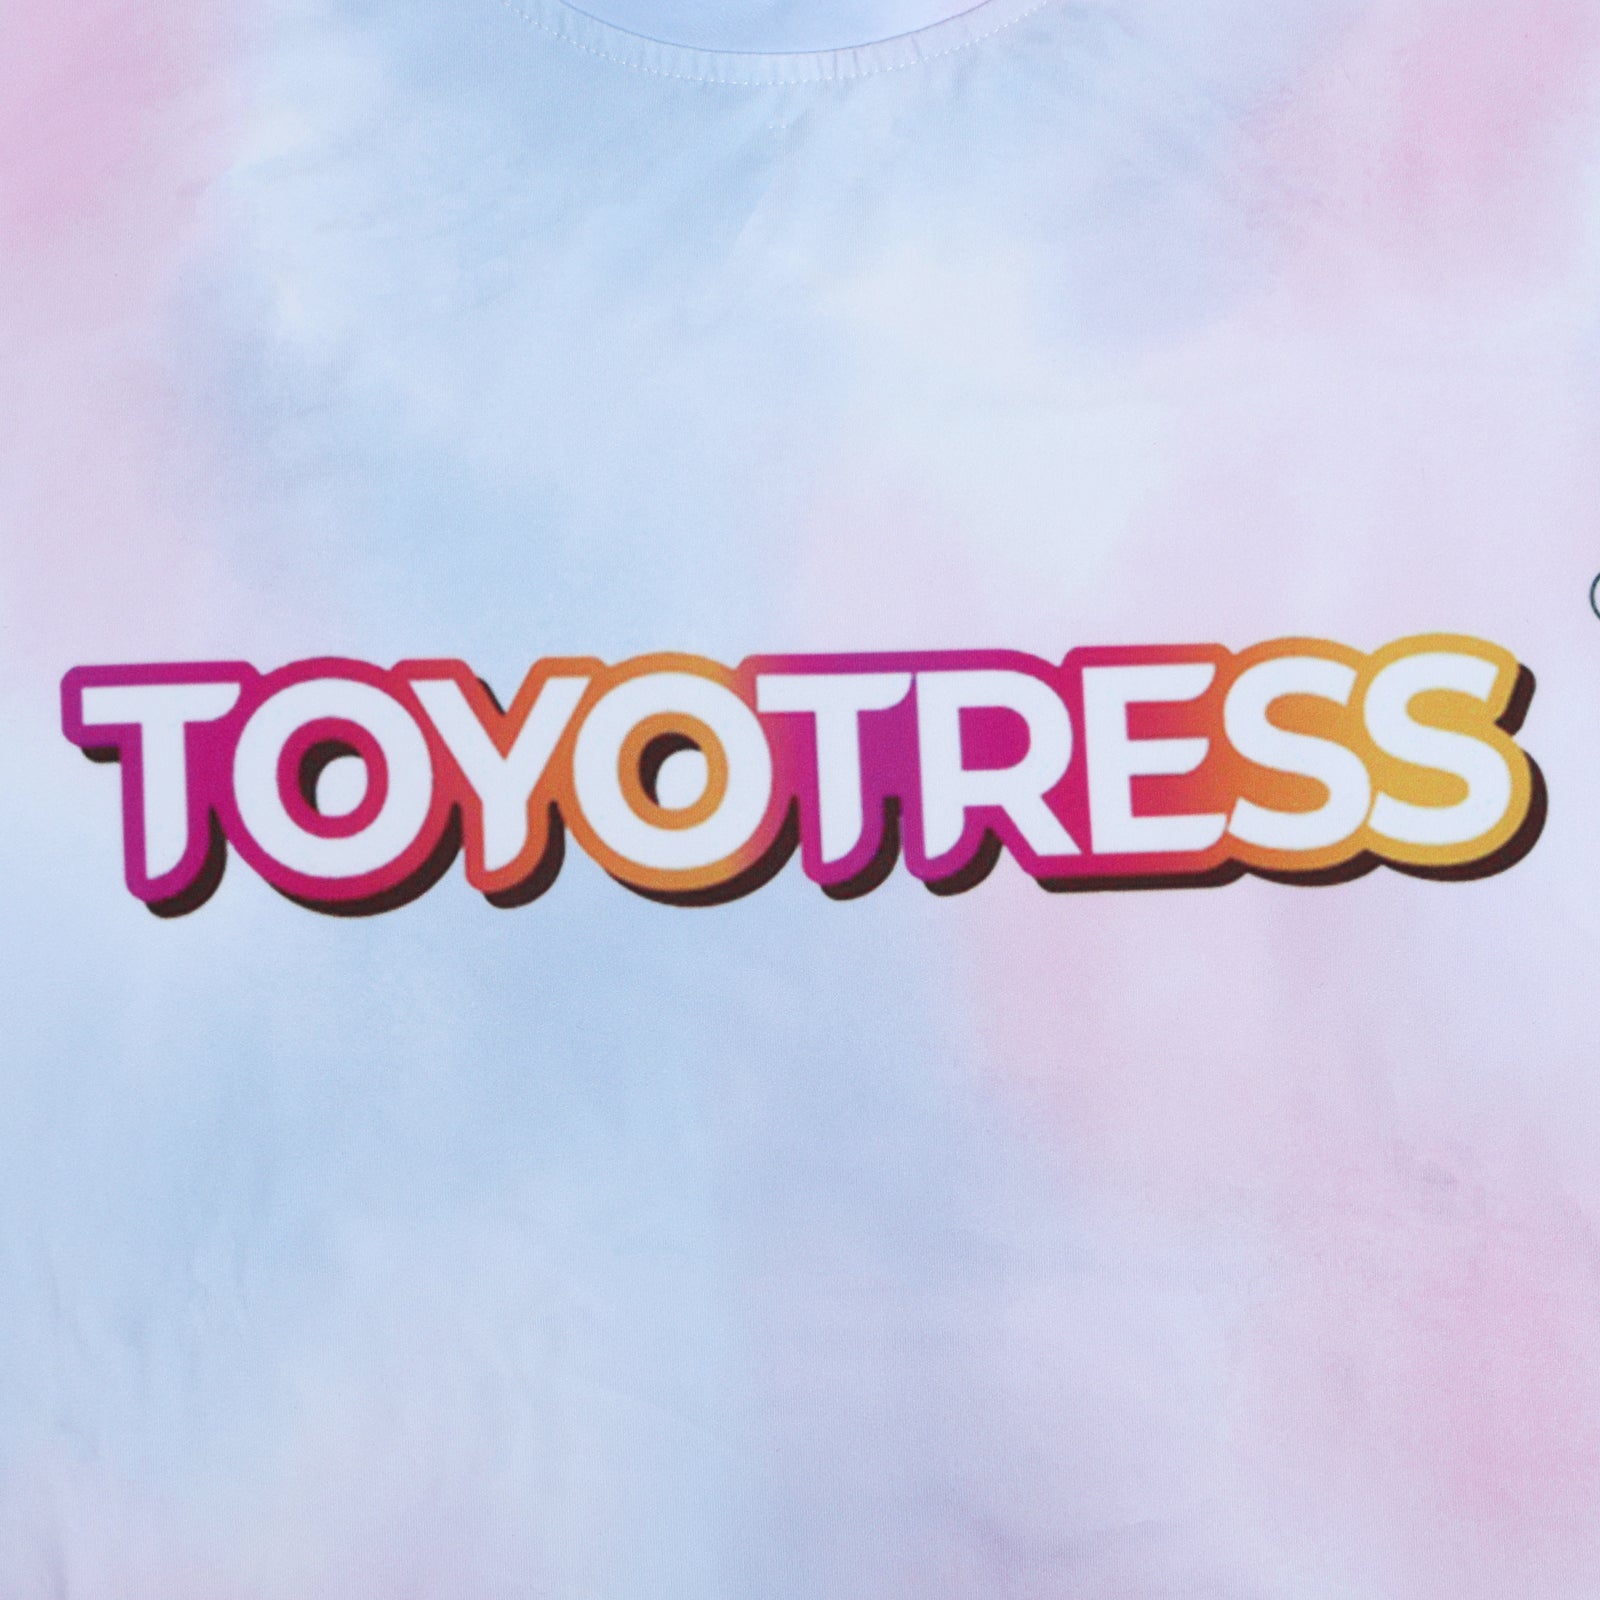 TOYOTRESS COLORFUL T-SHIRT - Toyotress